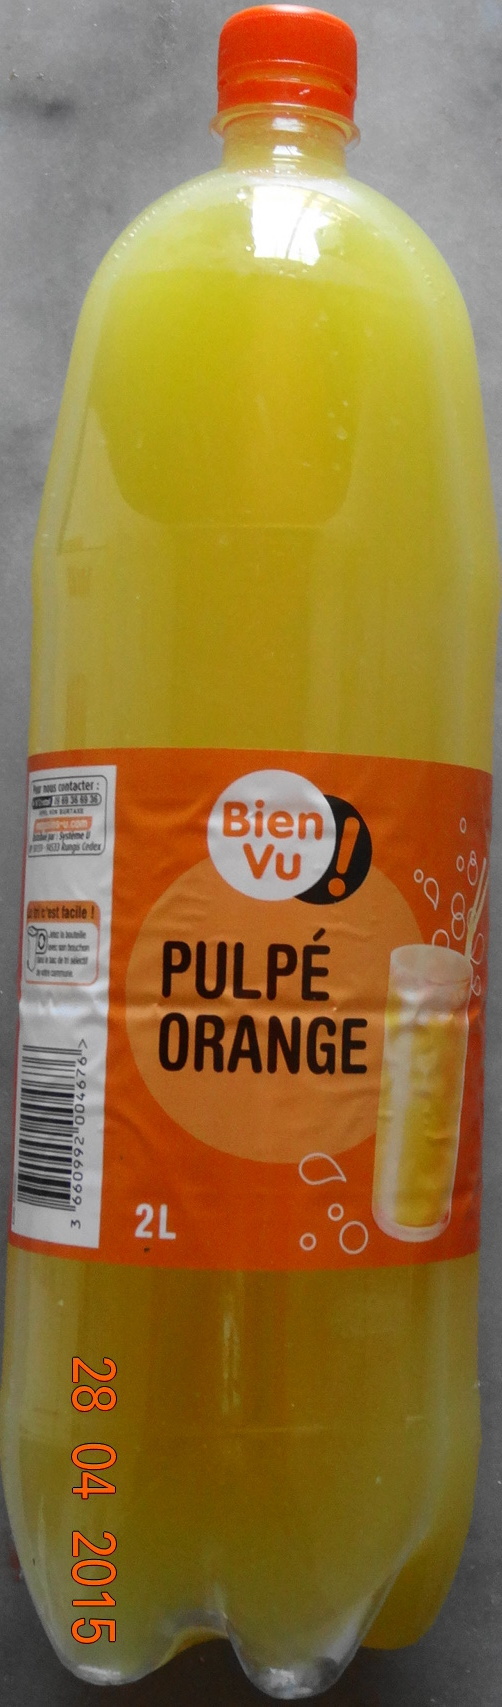 Pulpé Orange - Produit